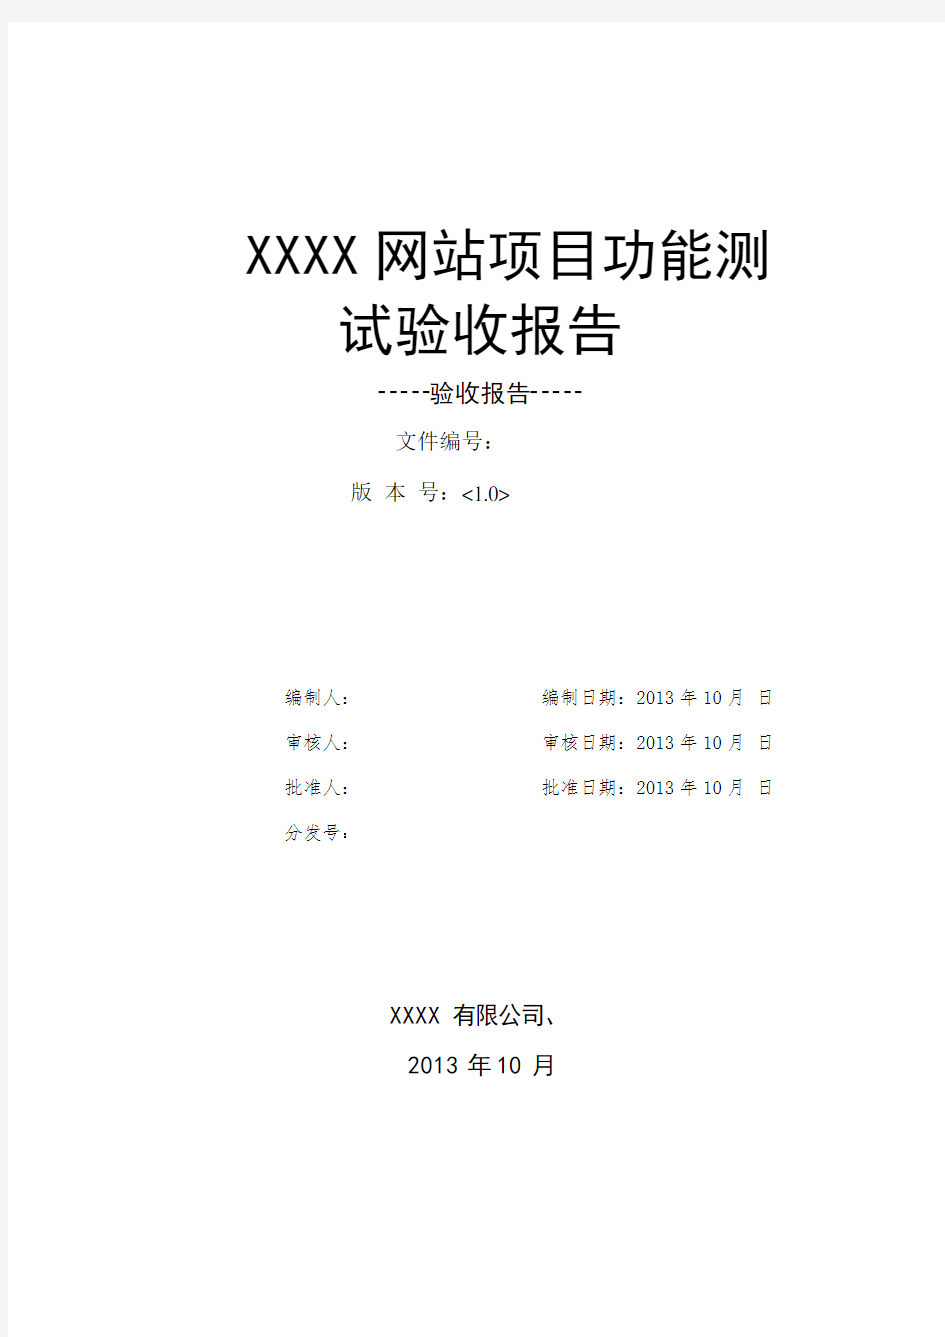 xxxx网站项目验收报告(可编辑修改word版)